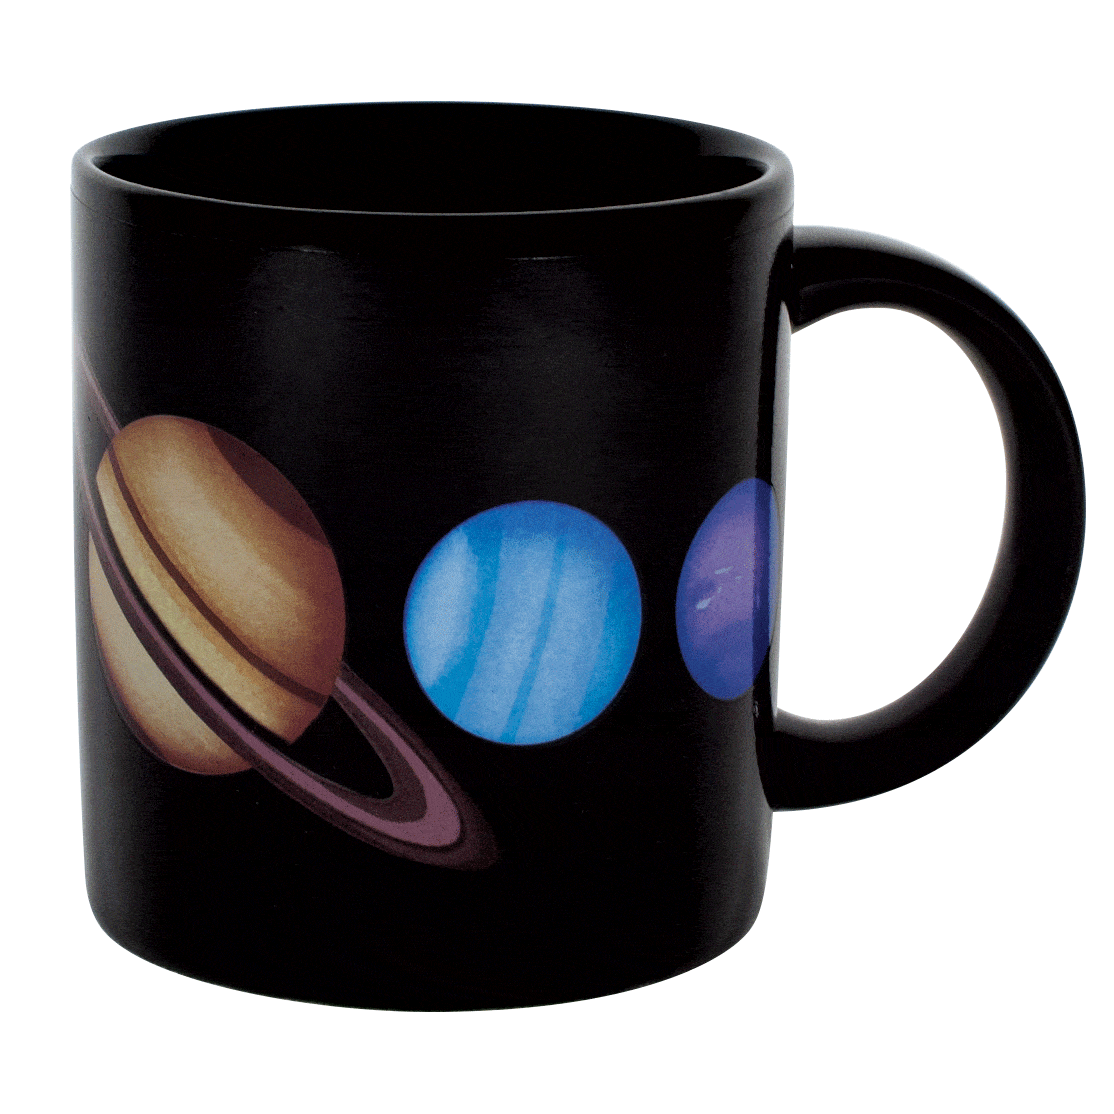 Planet mug